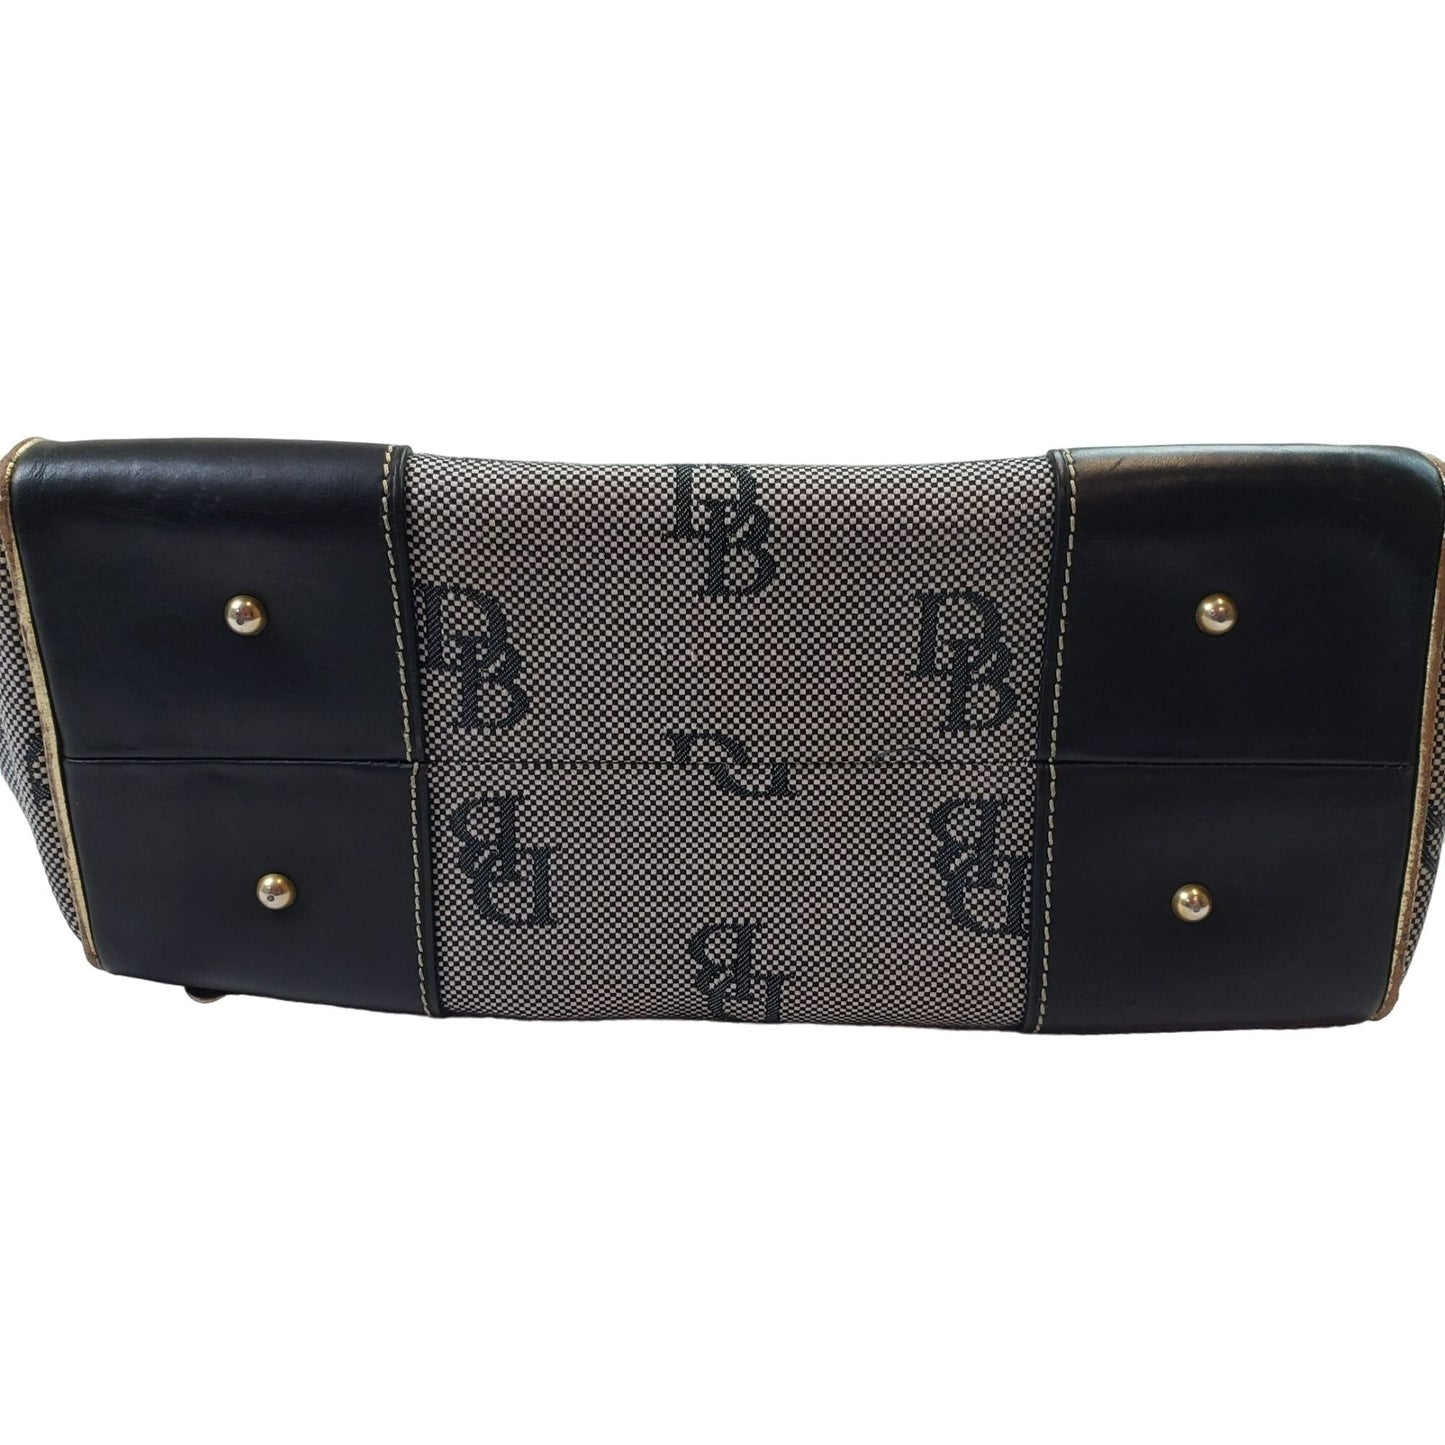 Dooney & Bourke Vintage Signature Leather Trim Satchel Handbag